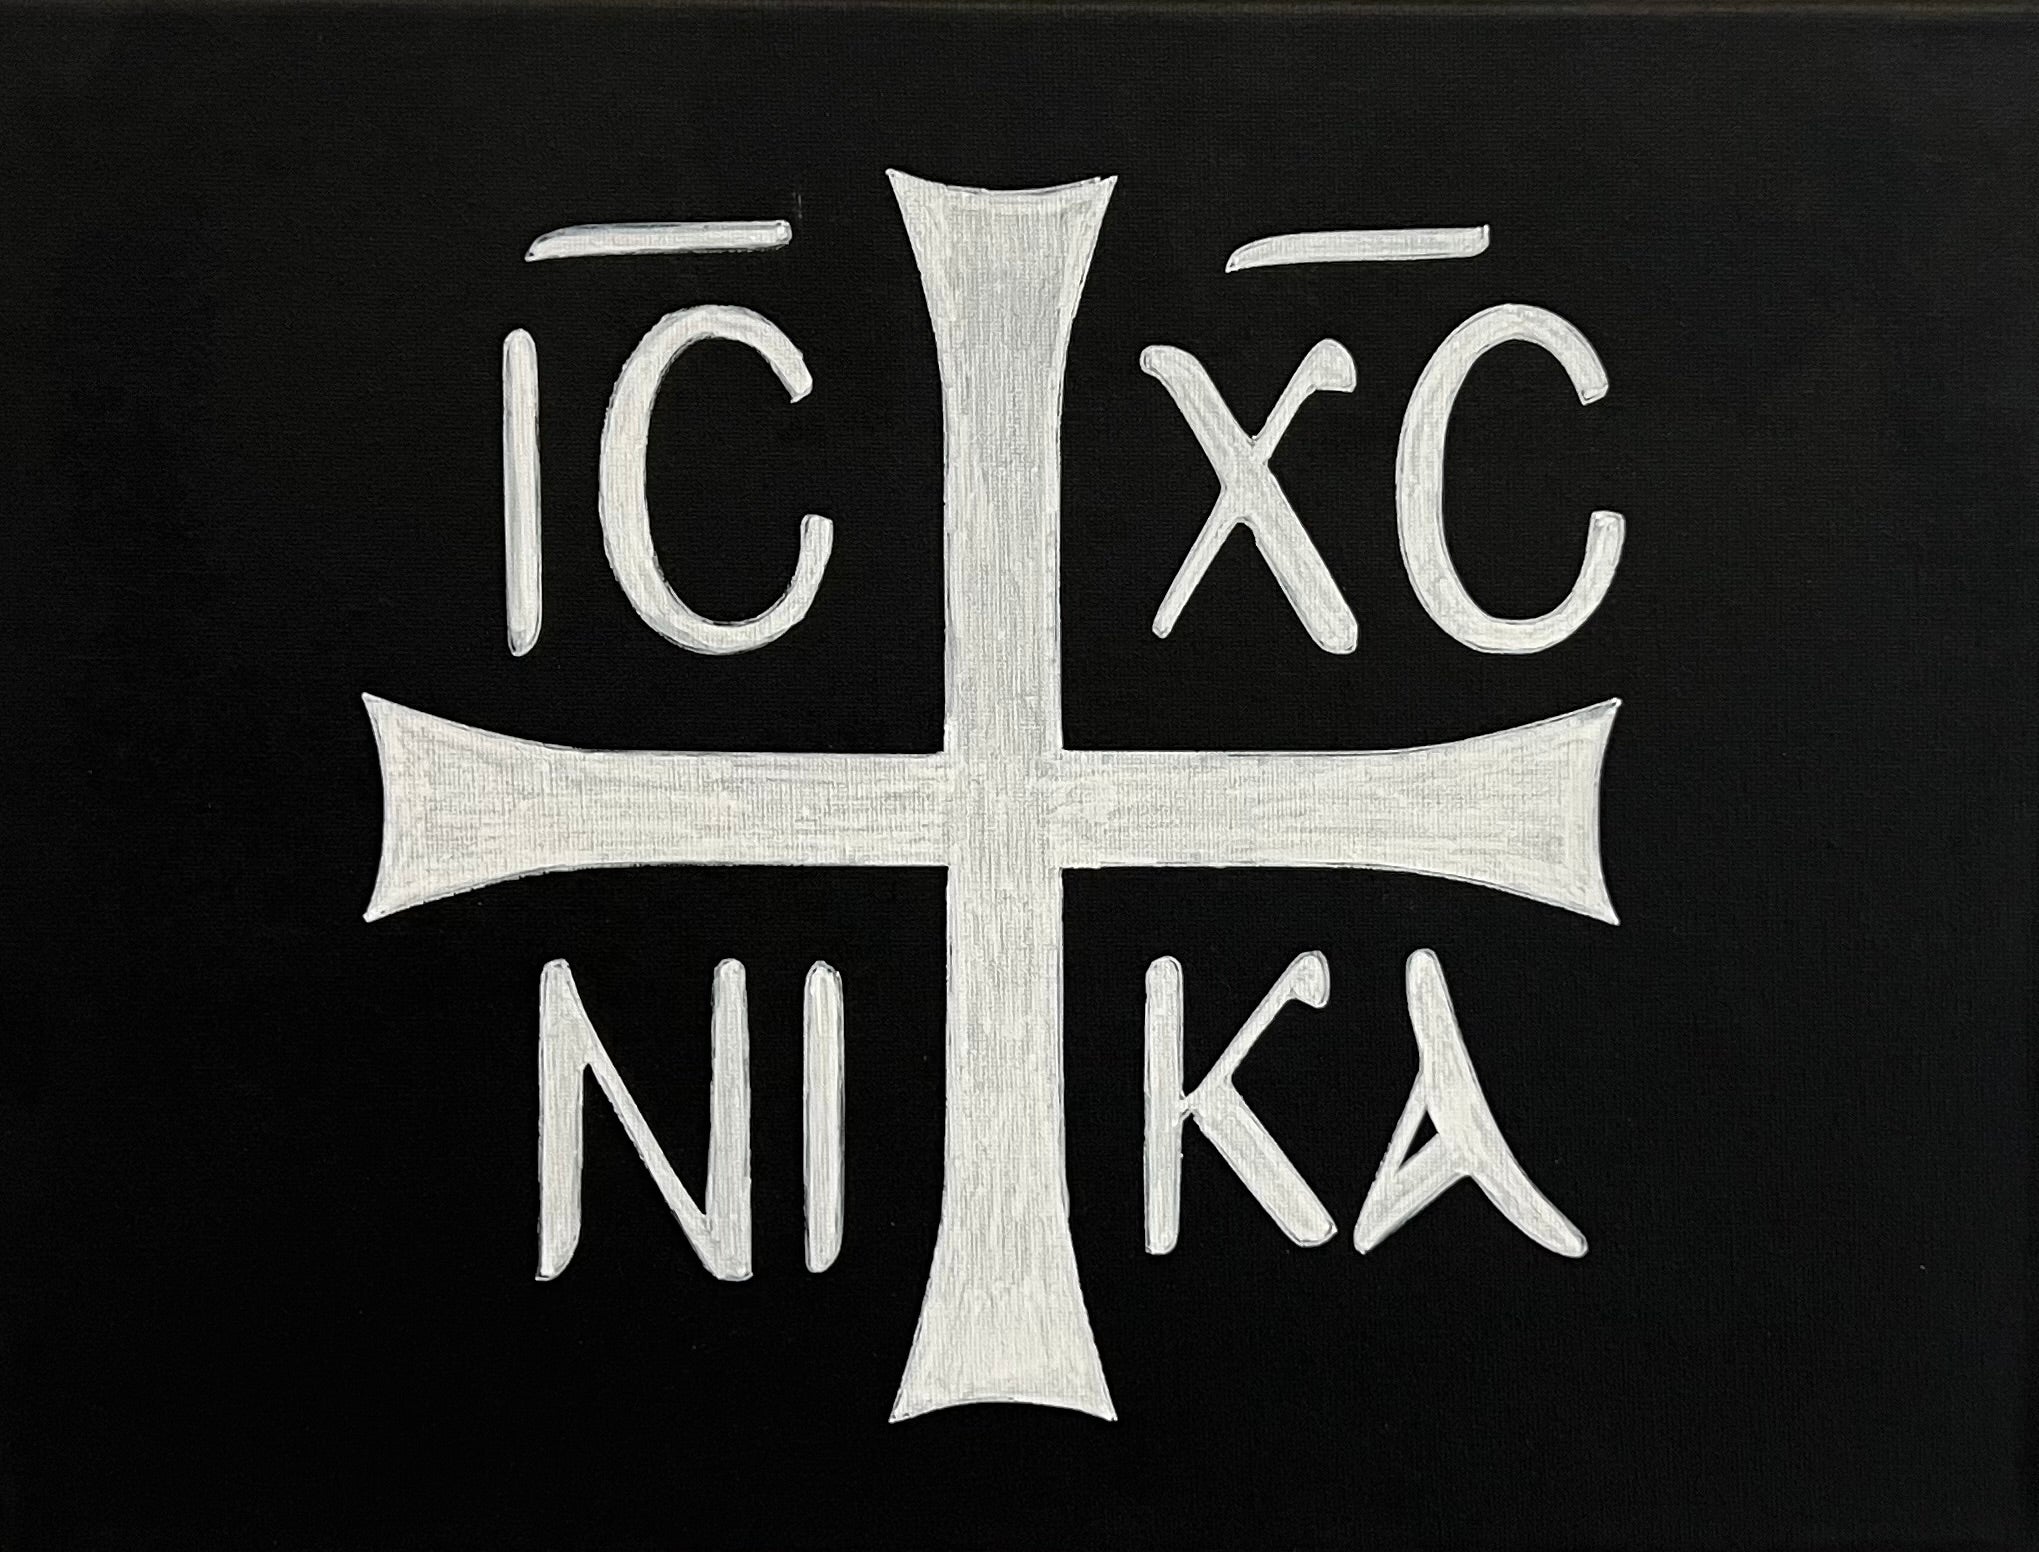 IC XC NIKA Hand Painted Canvas